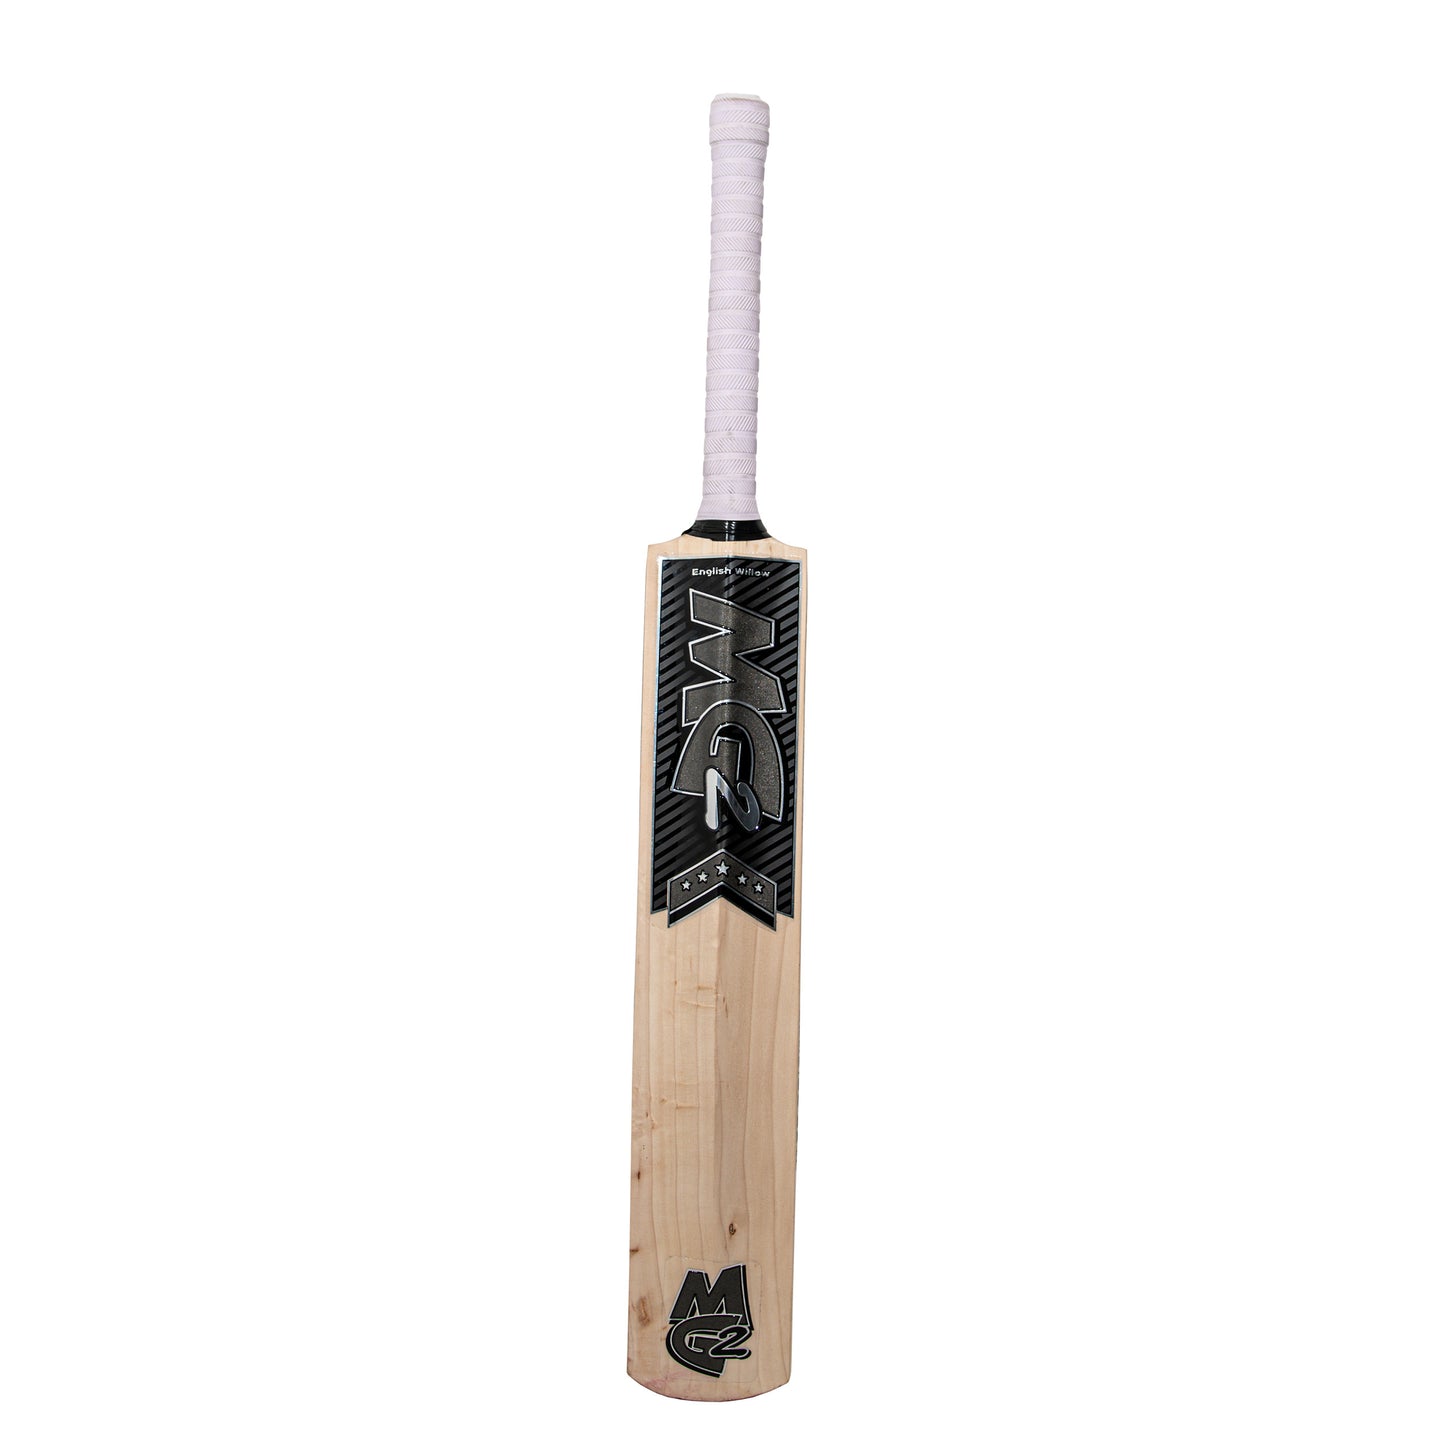 Players Edition Cricket Bat